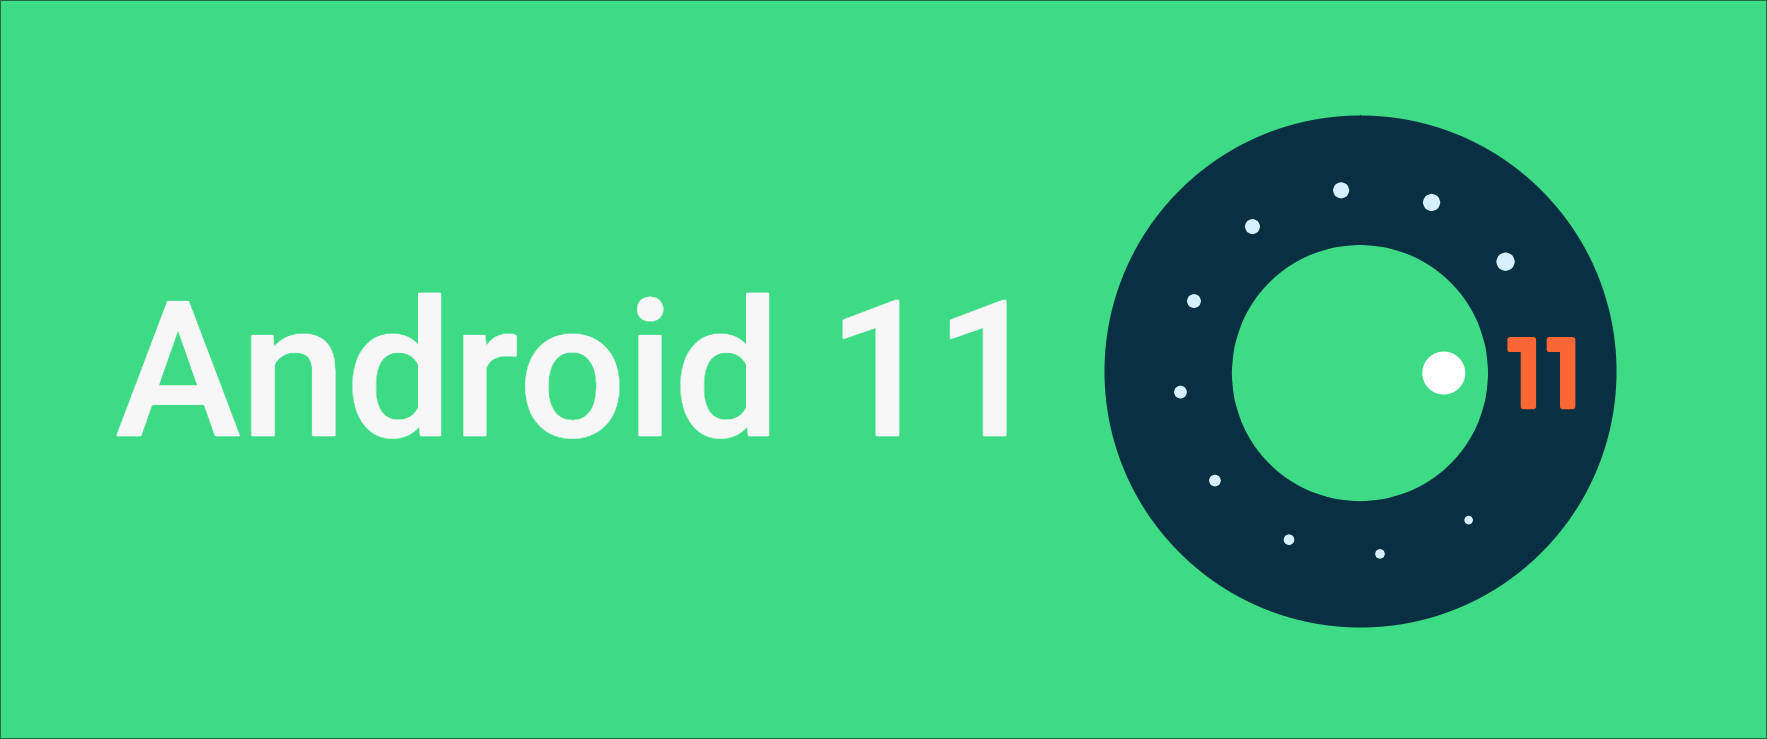 Android 11 Grøn Logo Baggrund Wallpaper